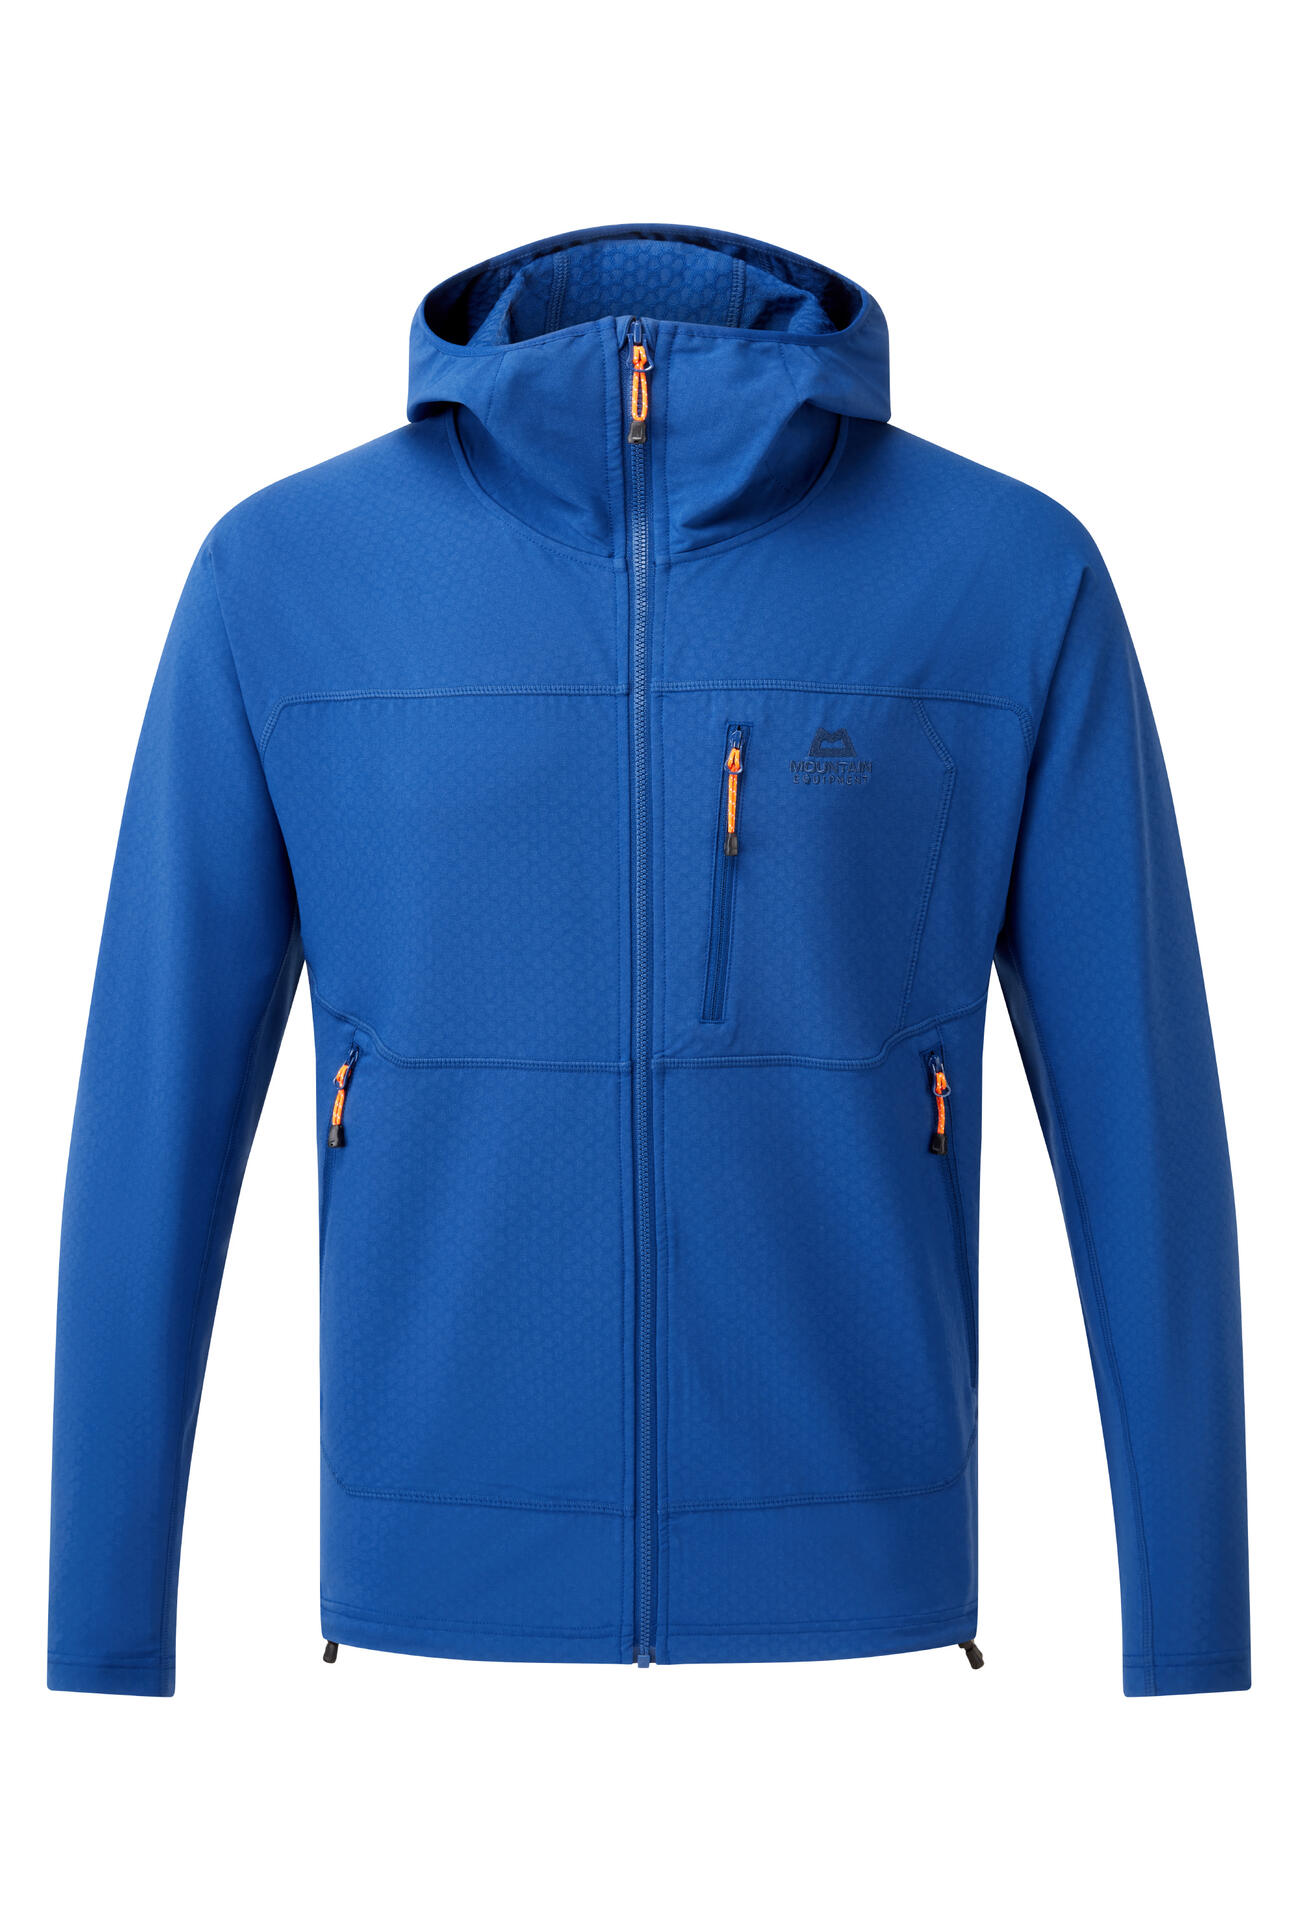 Mountain Equipment Arrow Hooded Jacket Men'S Barva: admiral blue, Velikost: L